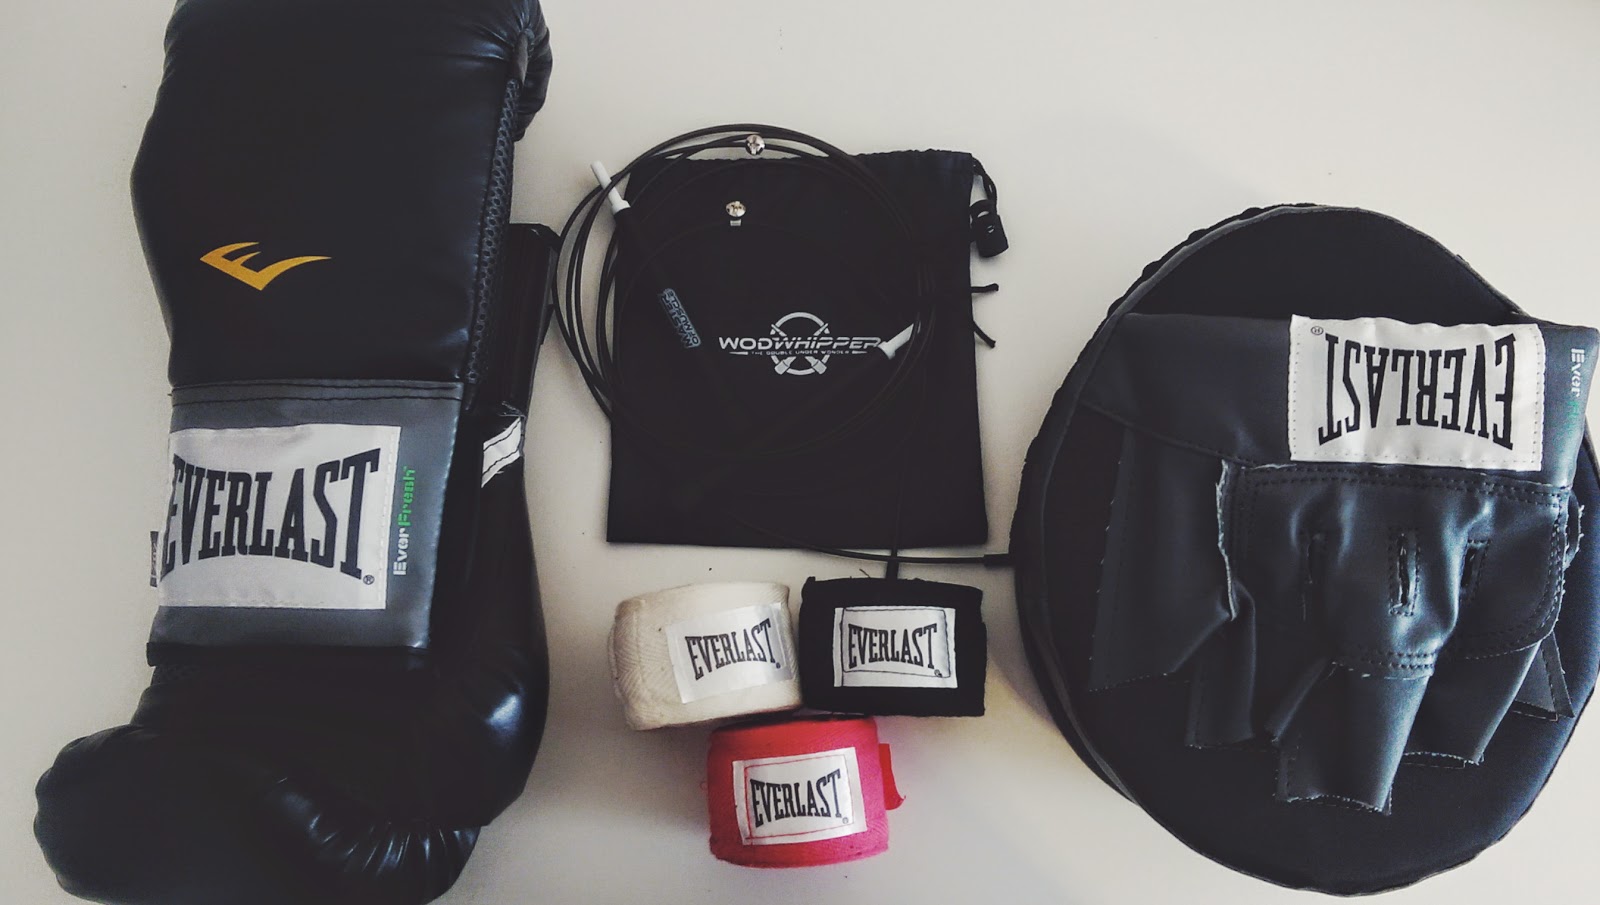  everlast-pro-boxing-gloves, everlast-hand wraps, everlast punch mitts, everlast boxing, everlast